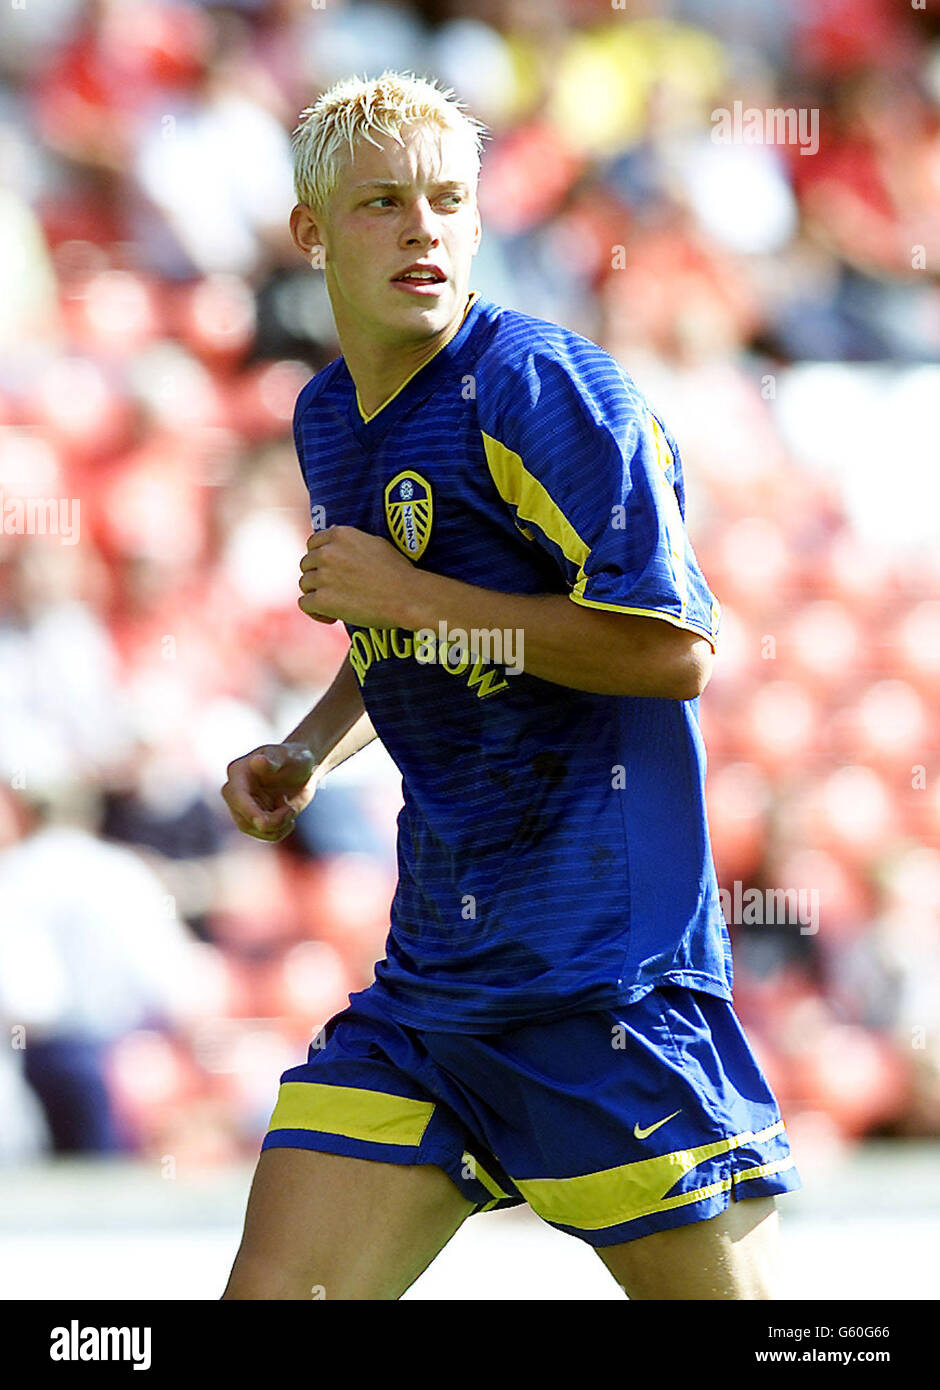 Alan Smith - Leeds Utd. Alan Smith of Leeds Utd in action during the Pre-Season friendly against Barnsley. Stock Photo